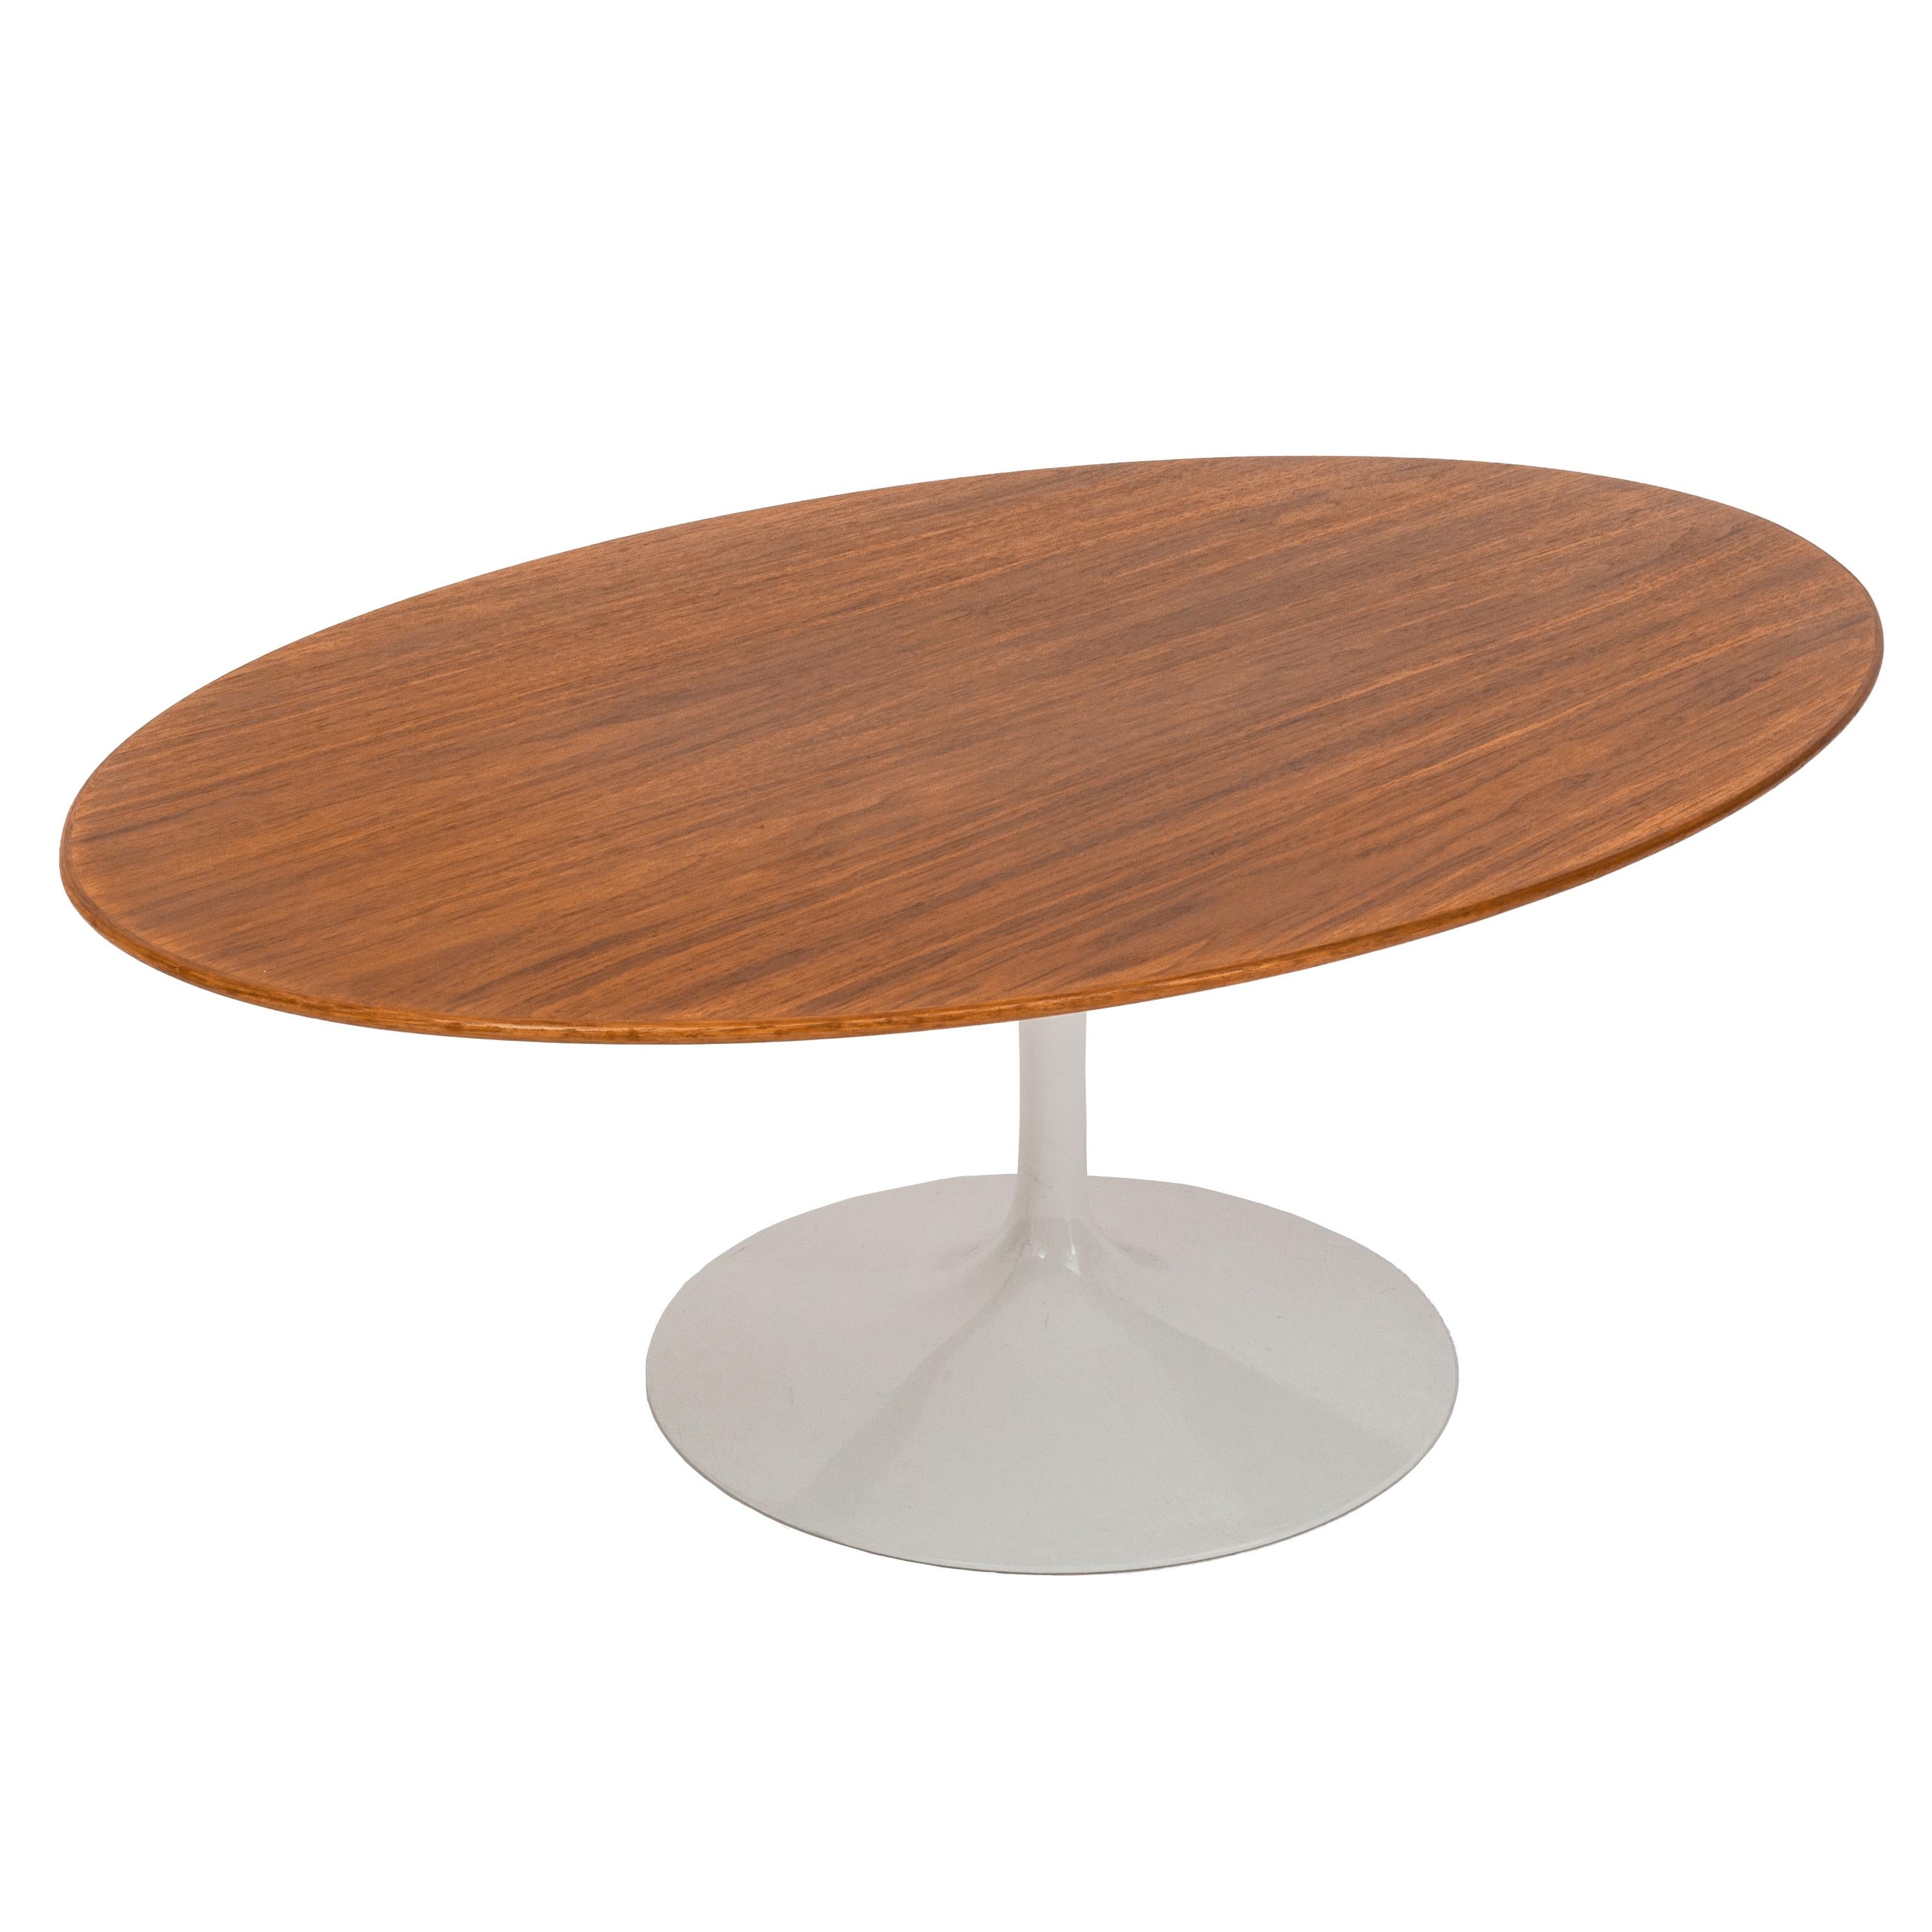 American Eero Saarinen Mid-Century Knoll Studio Tulip Pedestal Coffee Table 1956 Signed